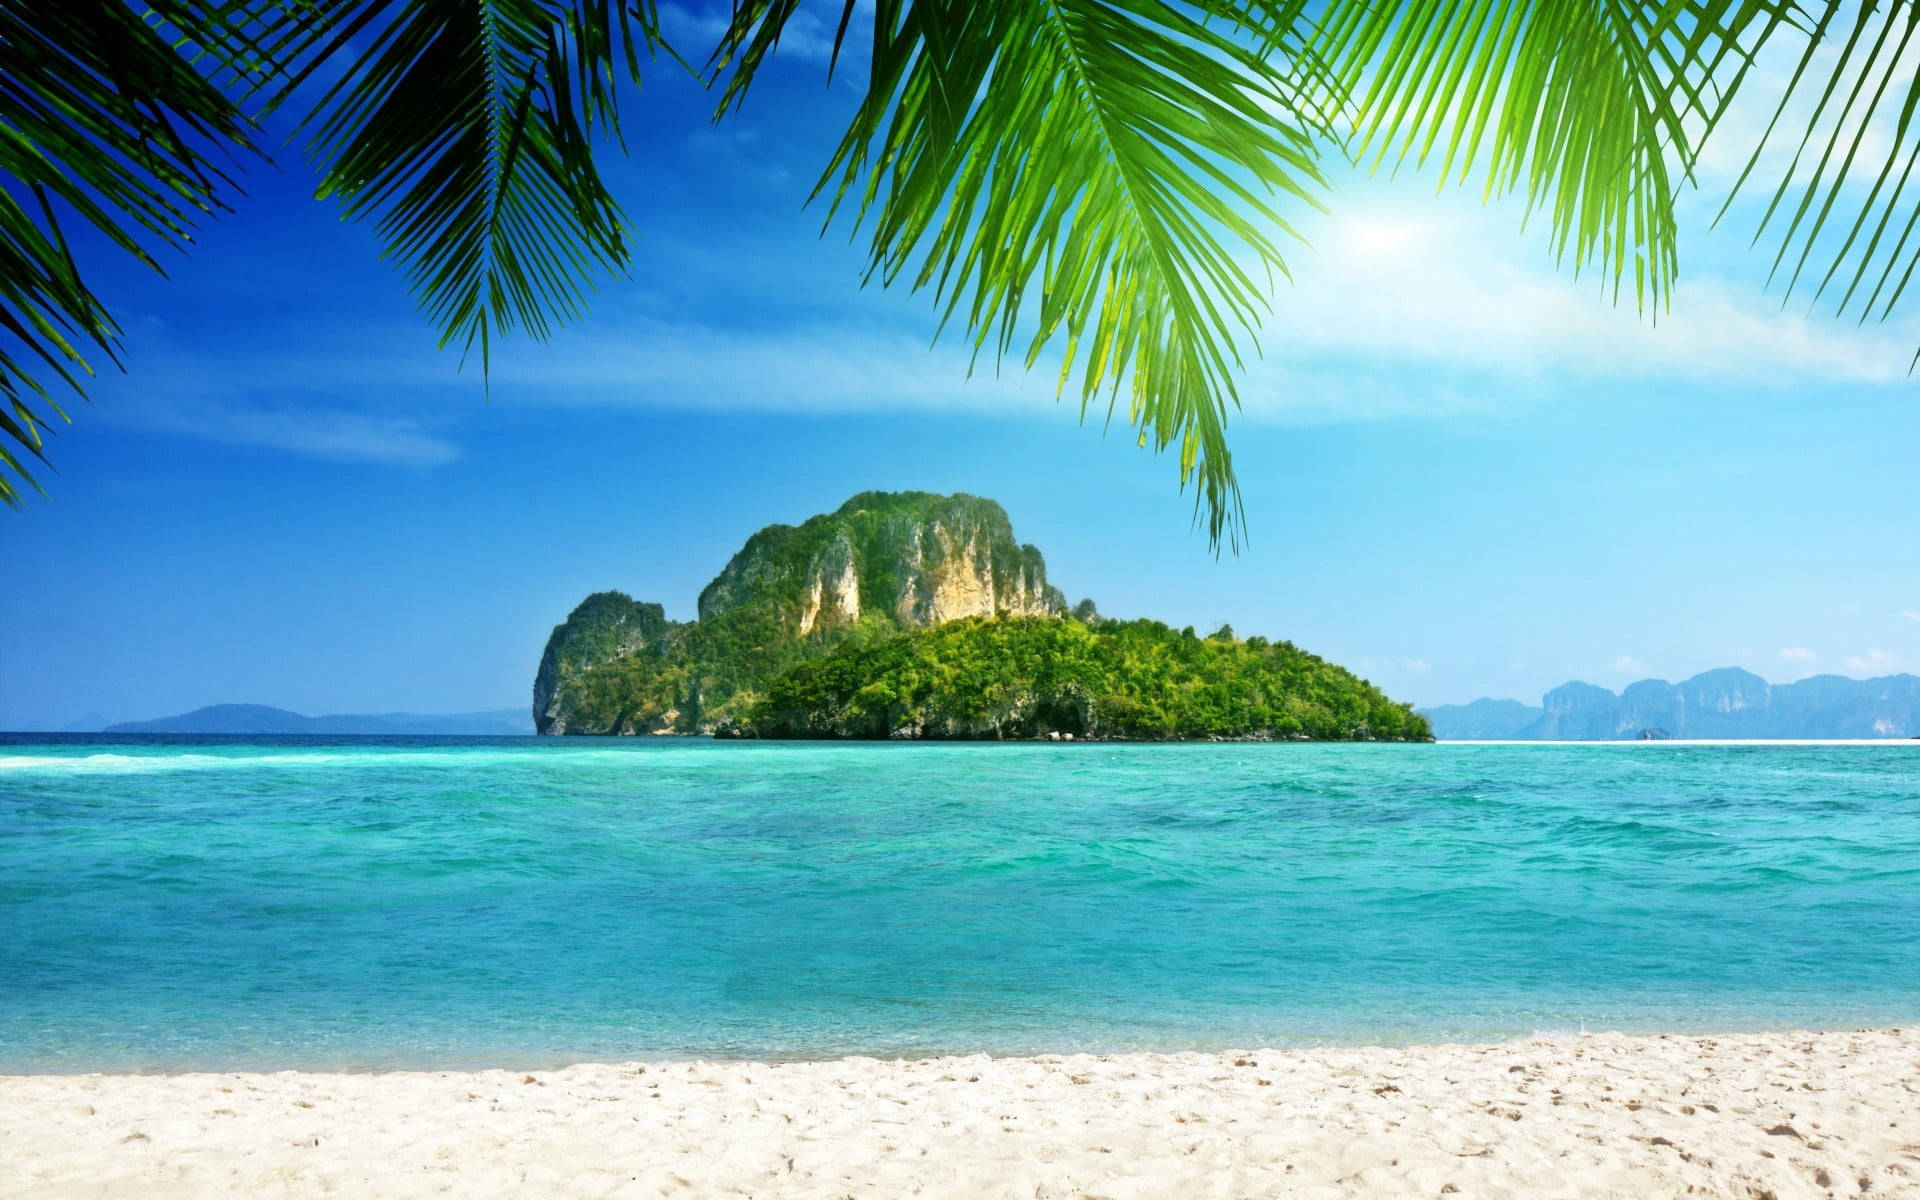  Green  island  beach island  tropical HD wallpaper  